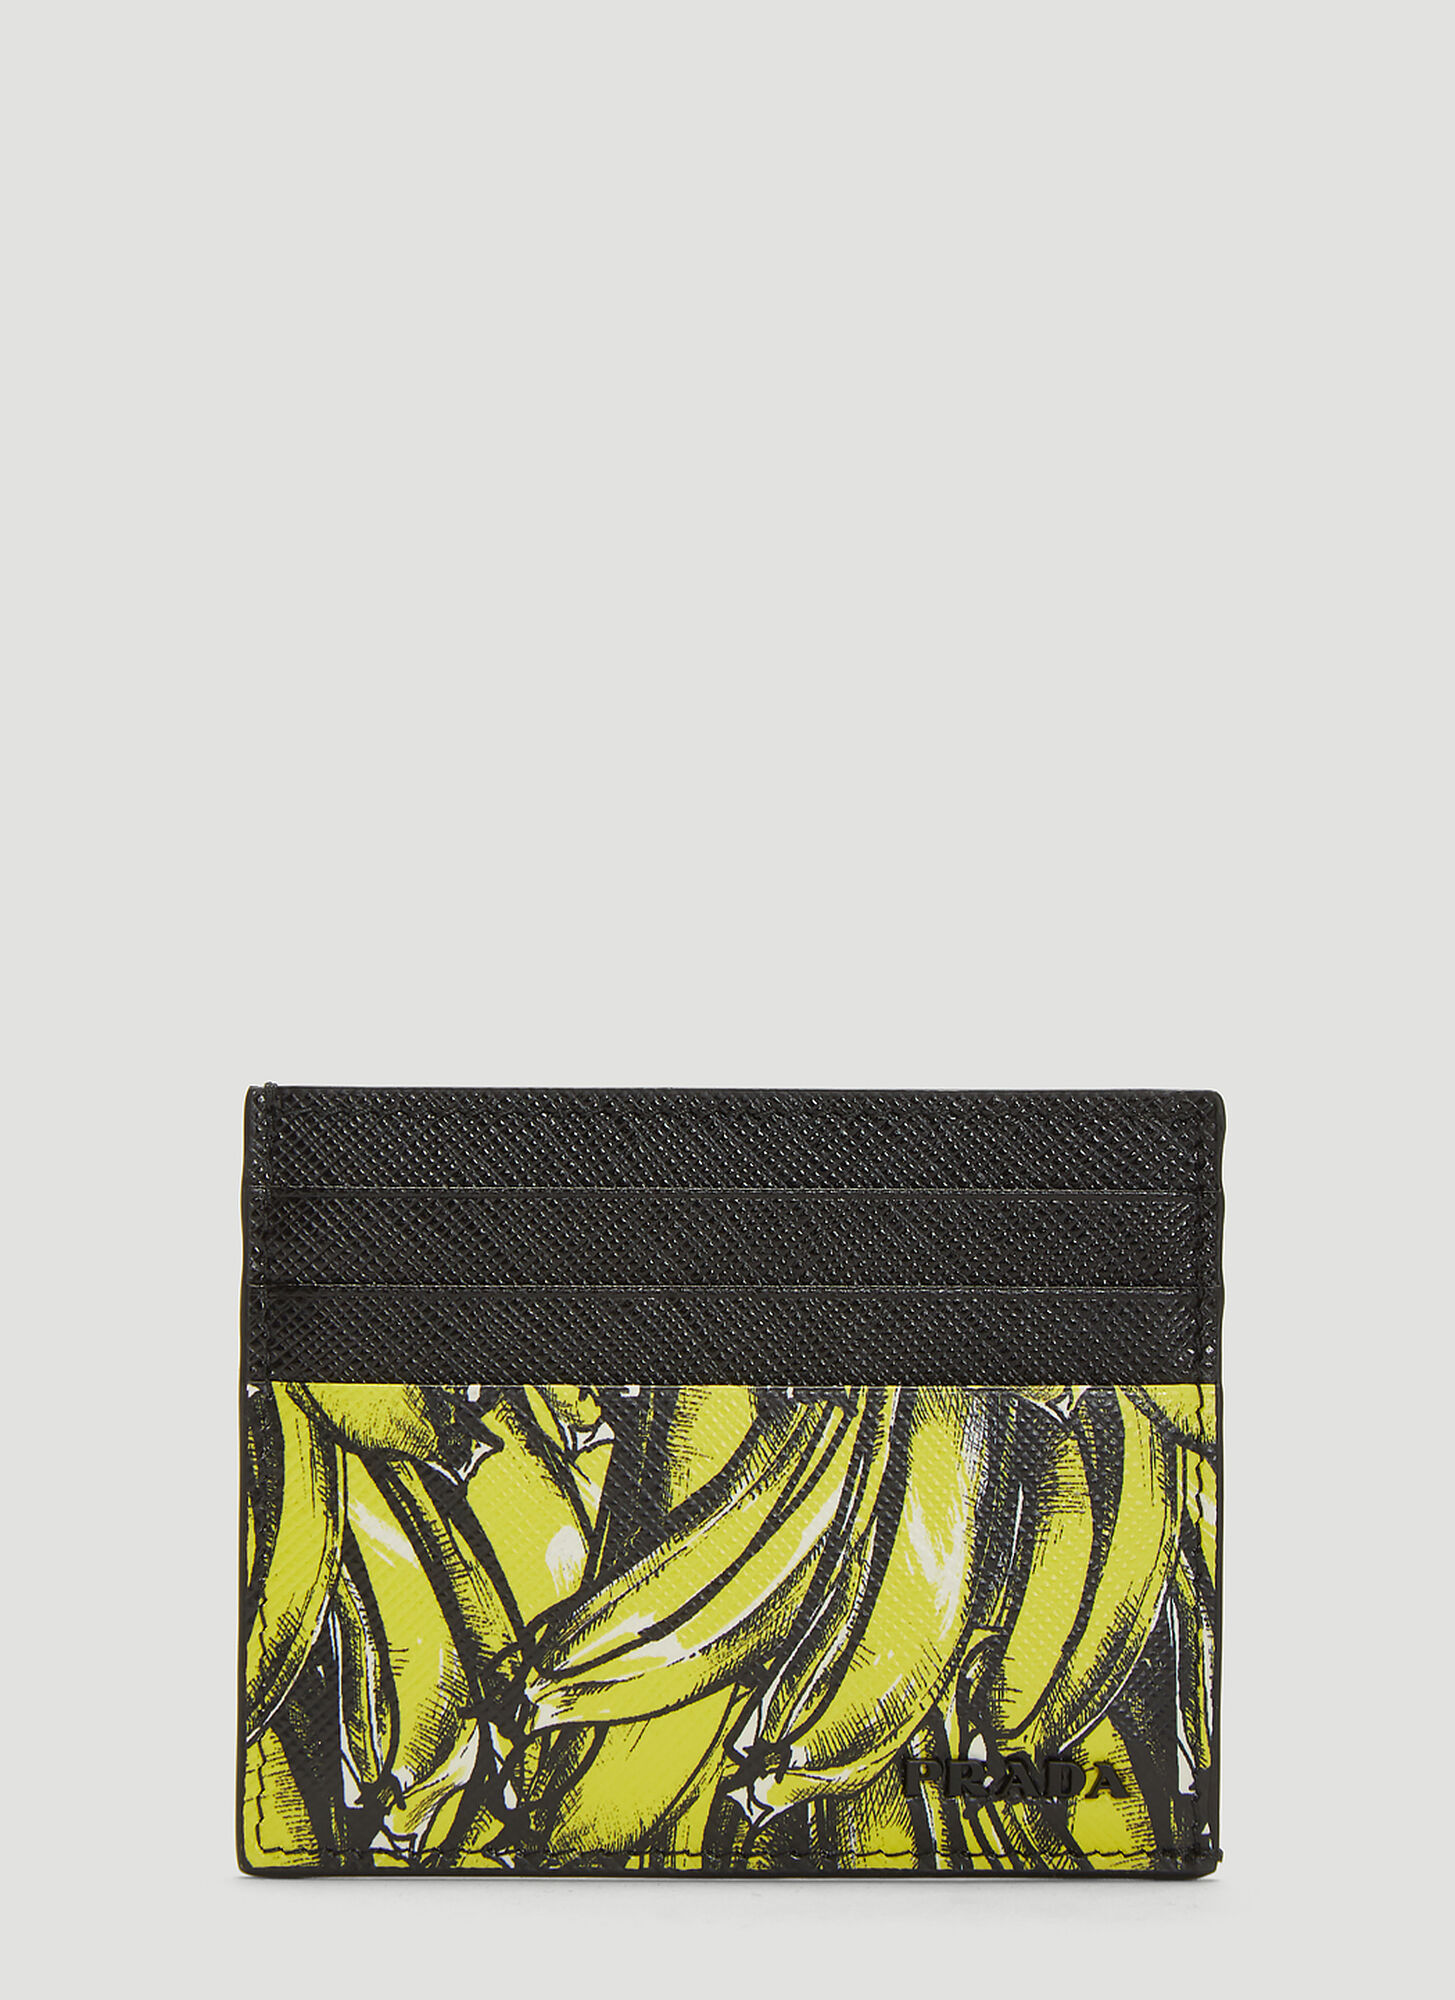 Prada Banana Print Card Holder in Black size One Size | The Fashionisto